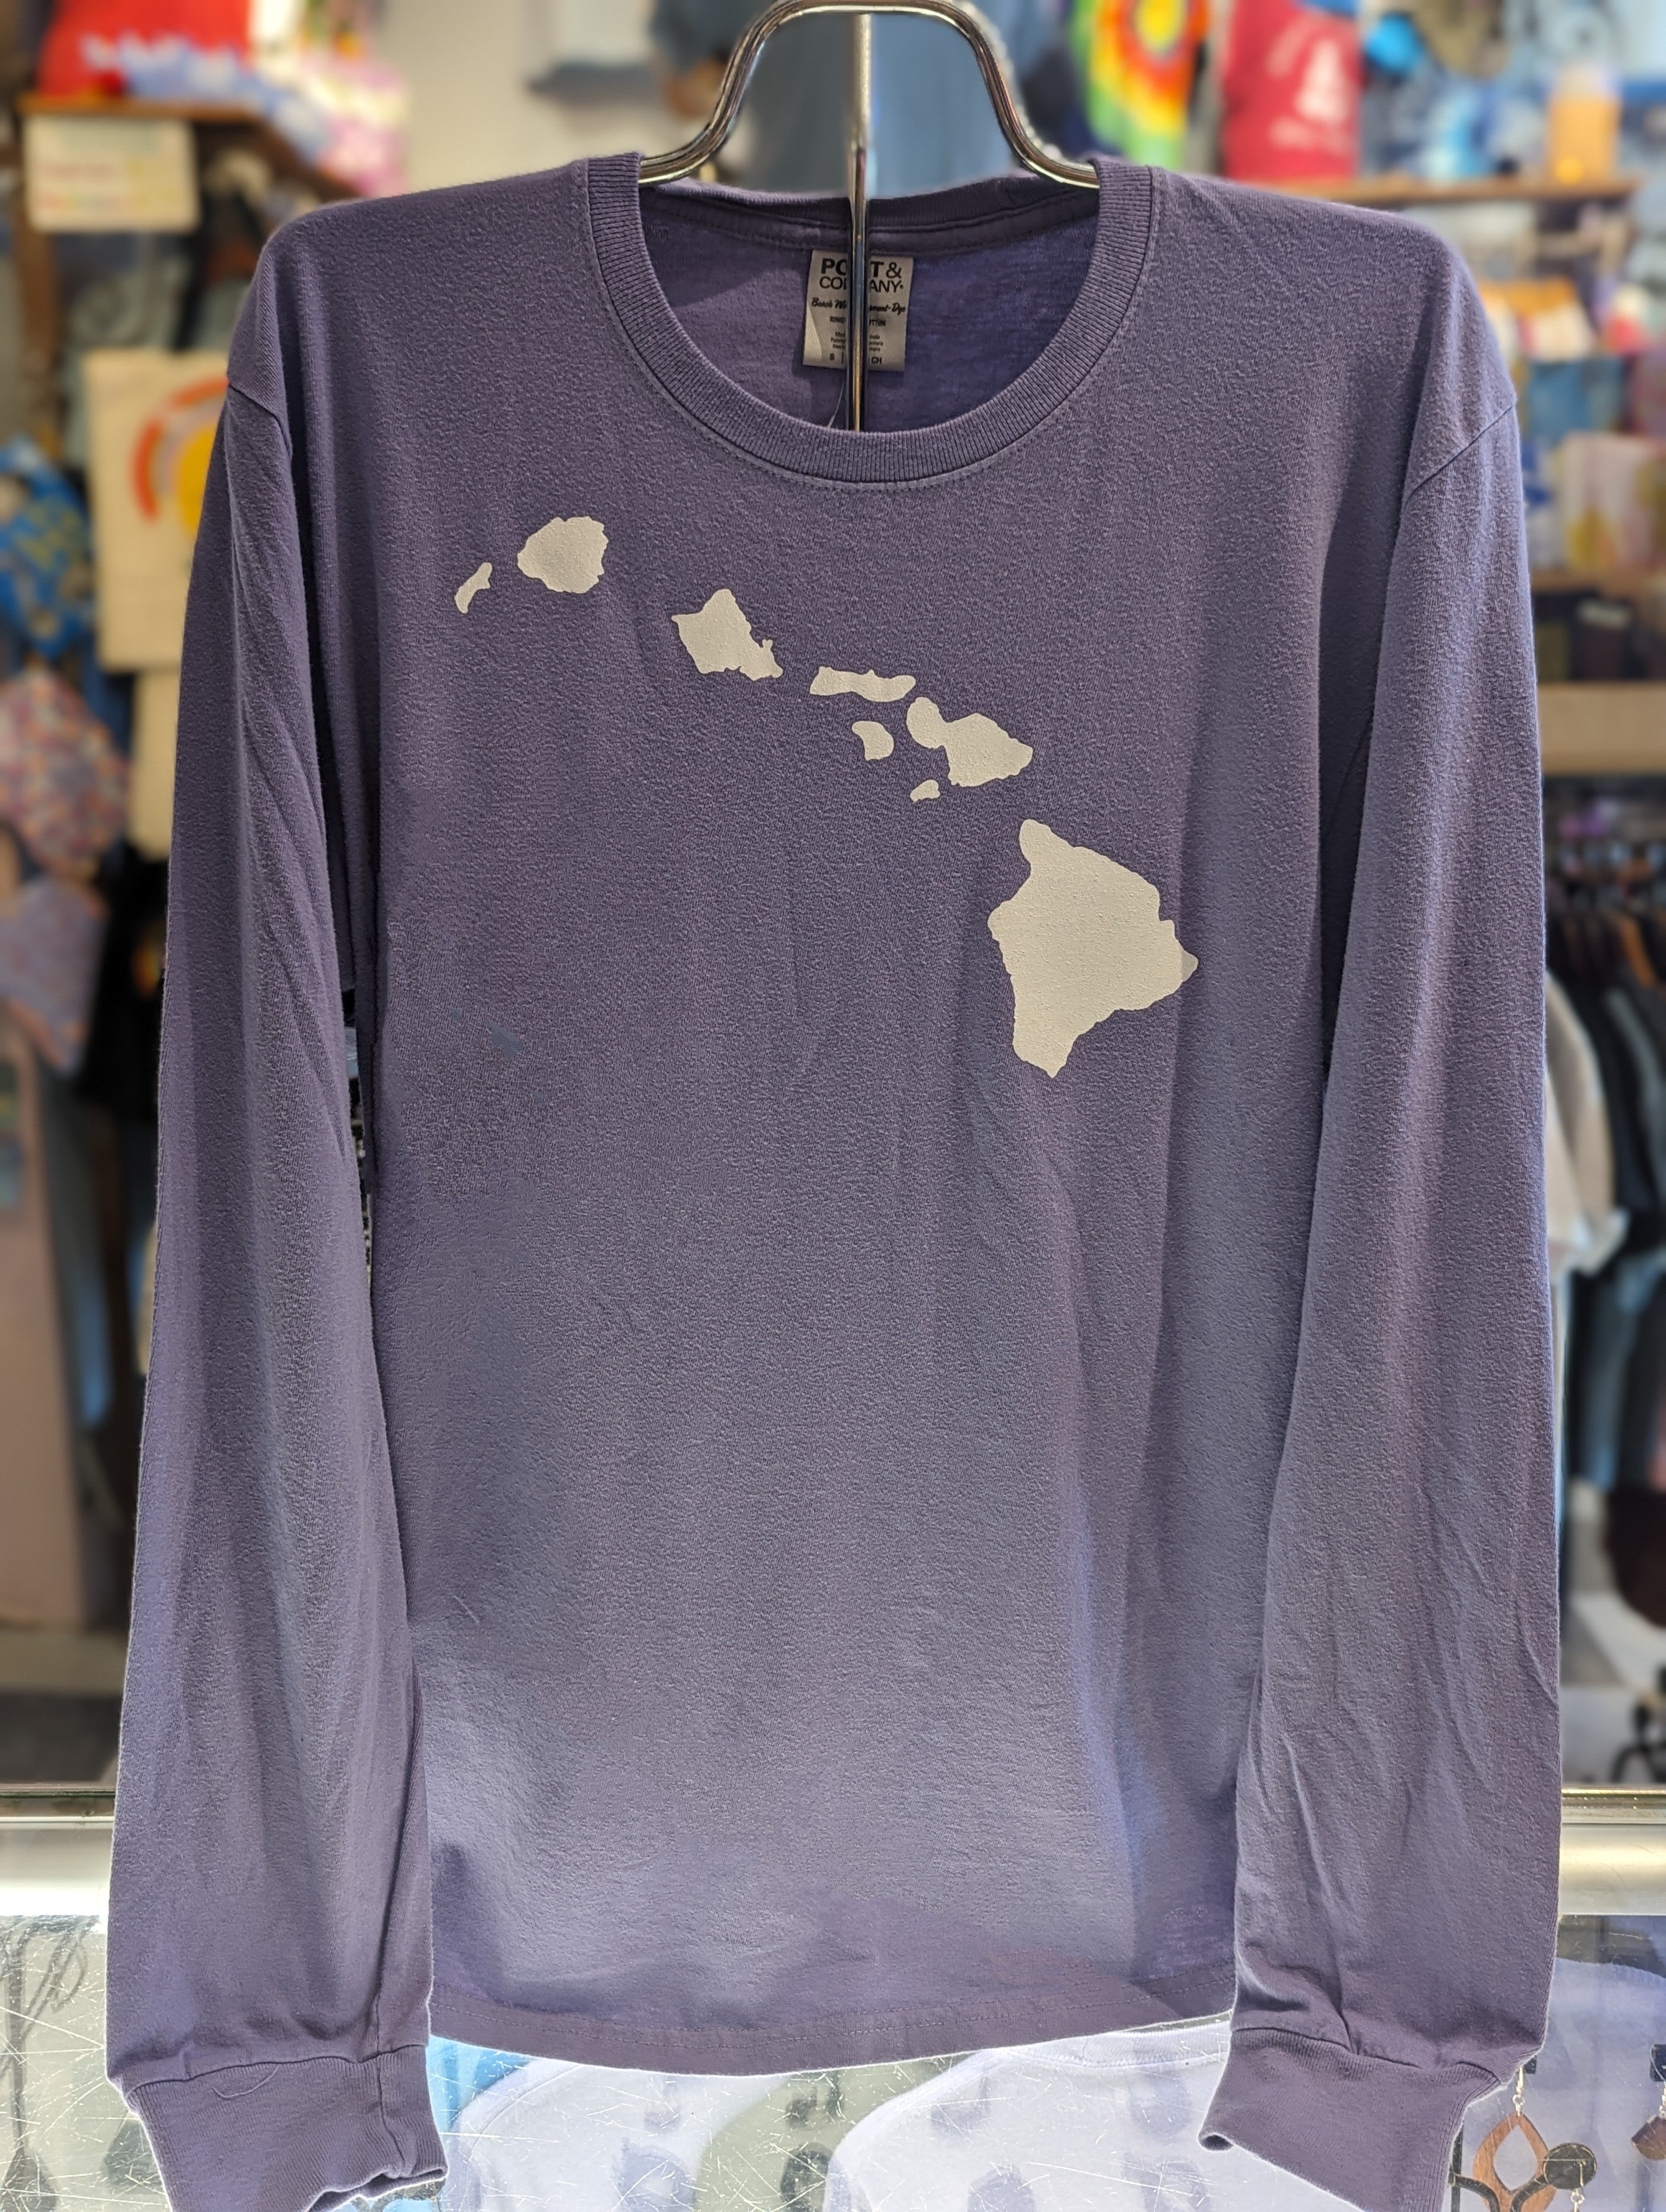 Men's Long-Sleeve Purple "Islands" Shirt